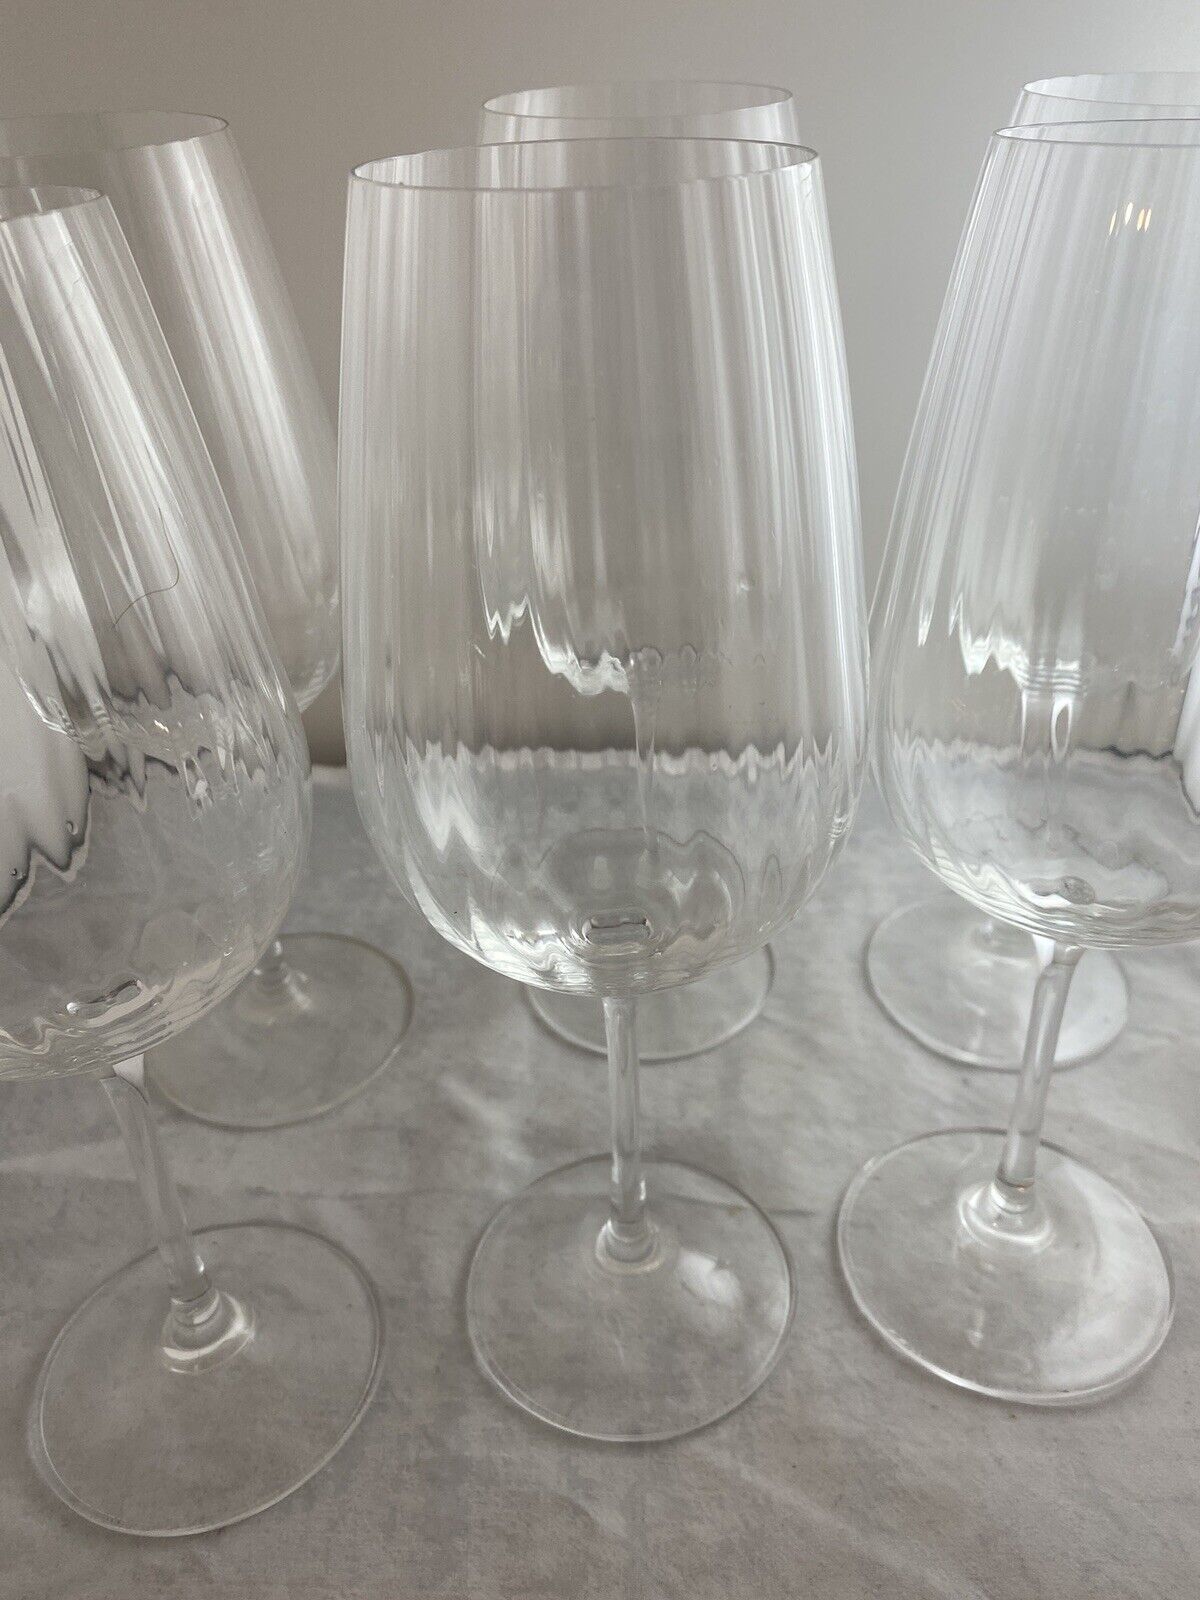 Optic Ribbed Crystal Stemware Wine Glasses Set Of 6. Gorgeous